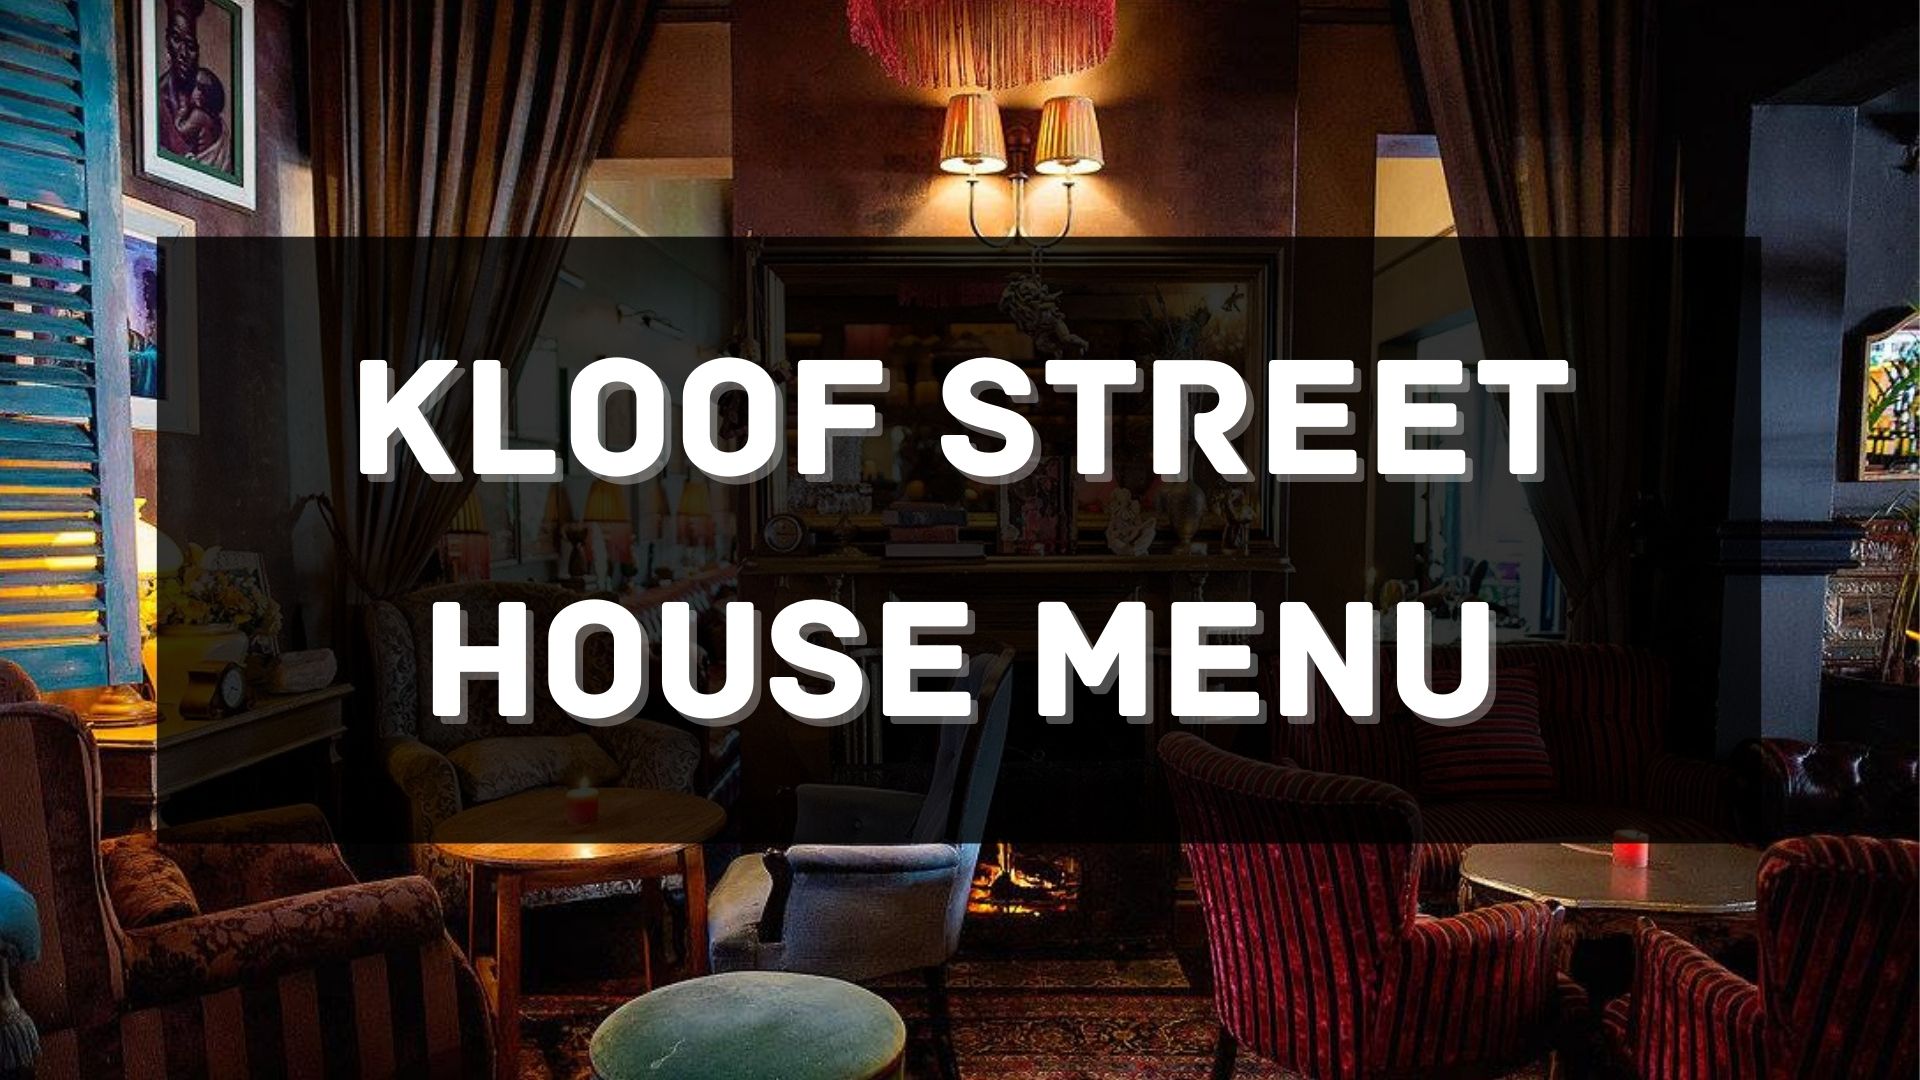 Kloof Street House Menu South Africa